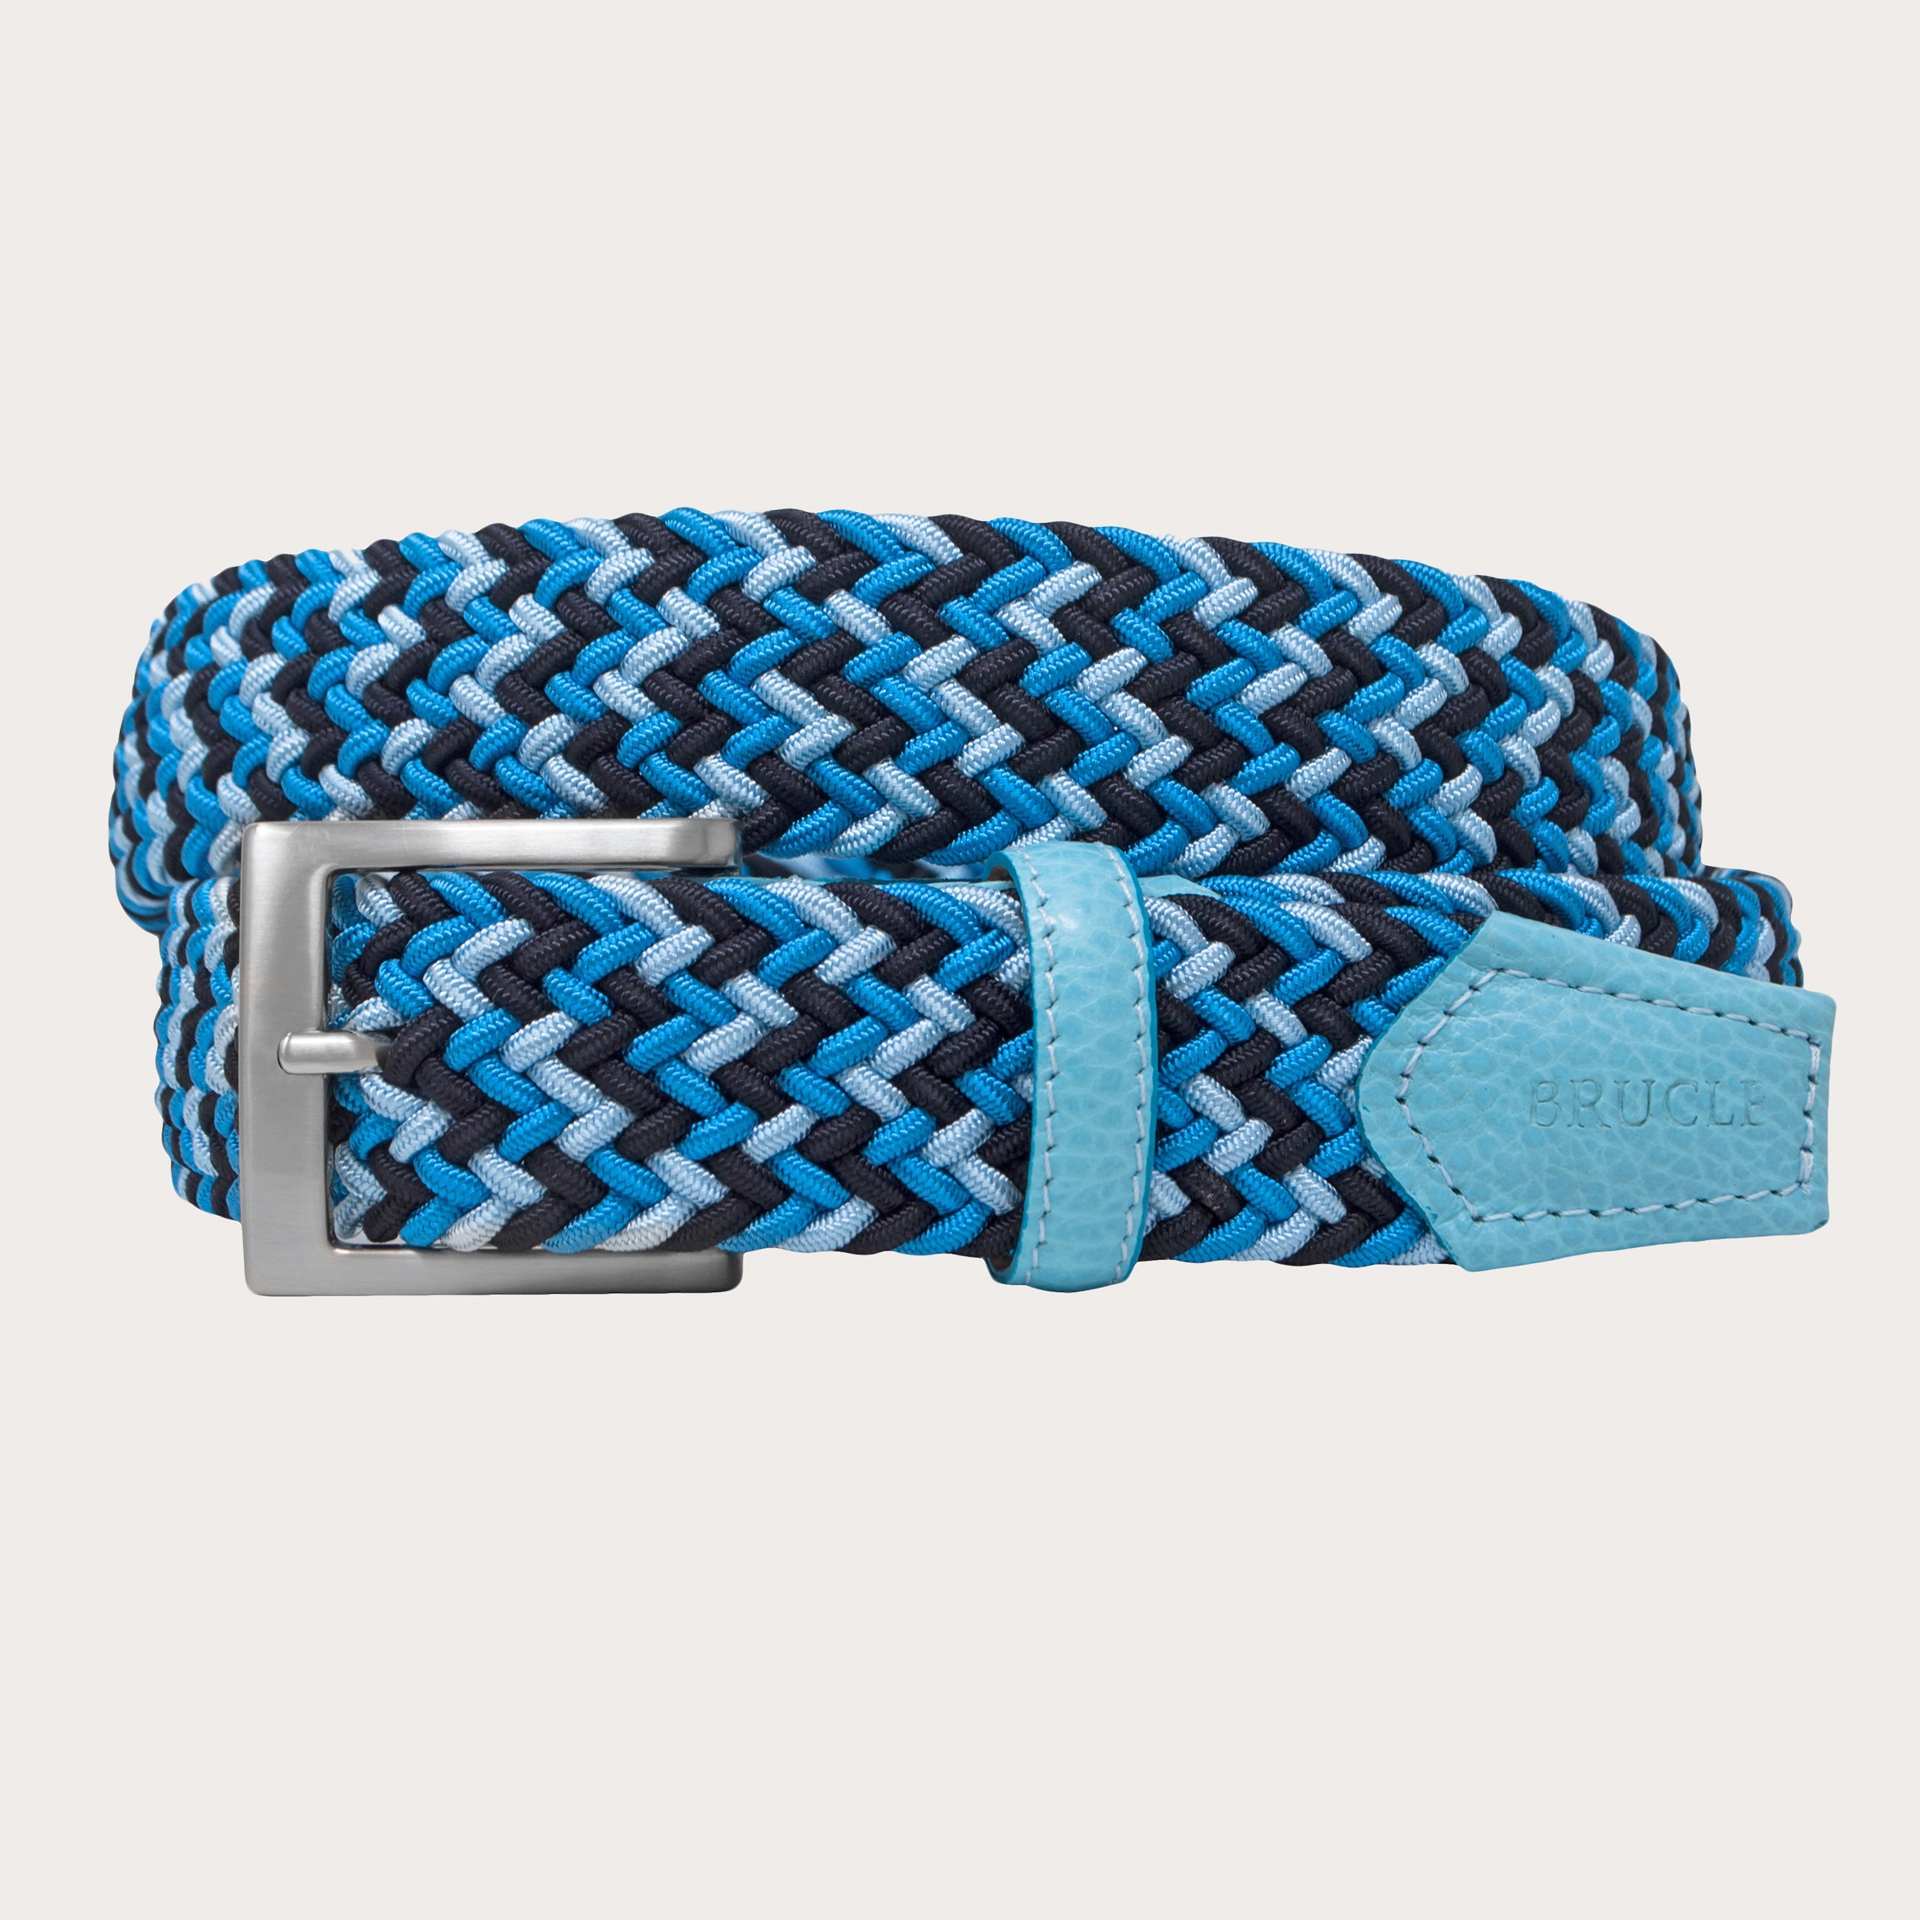 Braided elastic stretch tubular belt, blue navy and light blue